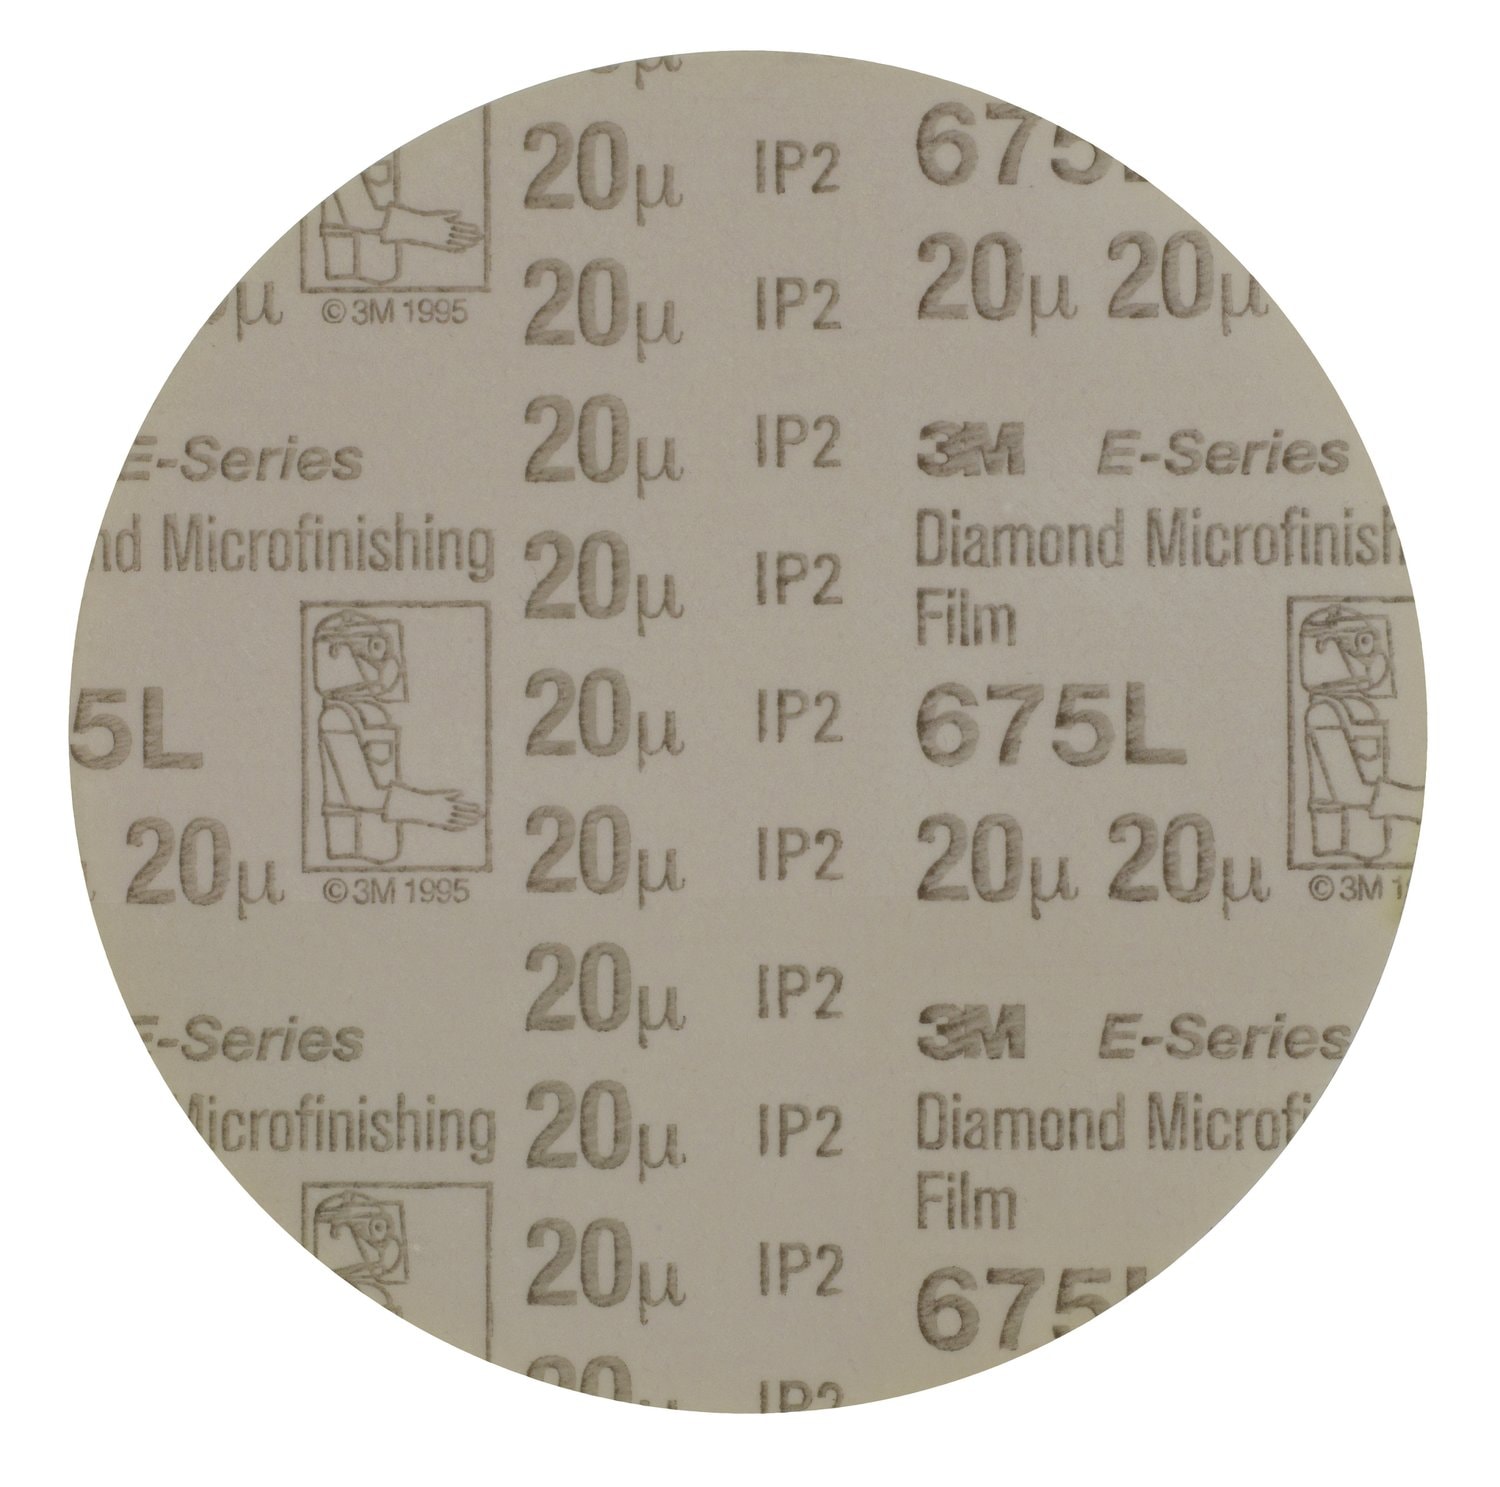 7010533341 - 3M Diamond Microfinishing Film Disc 675L, 20 Mic 5MIL, Beige, 12 in x
NH, Die 1200B